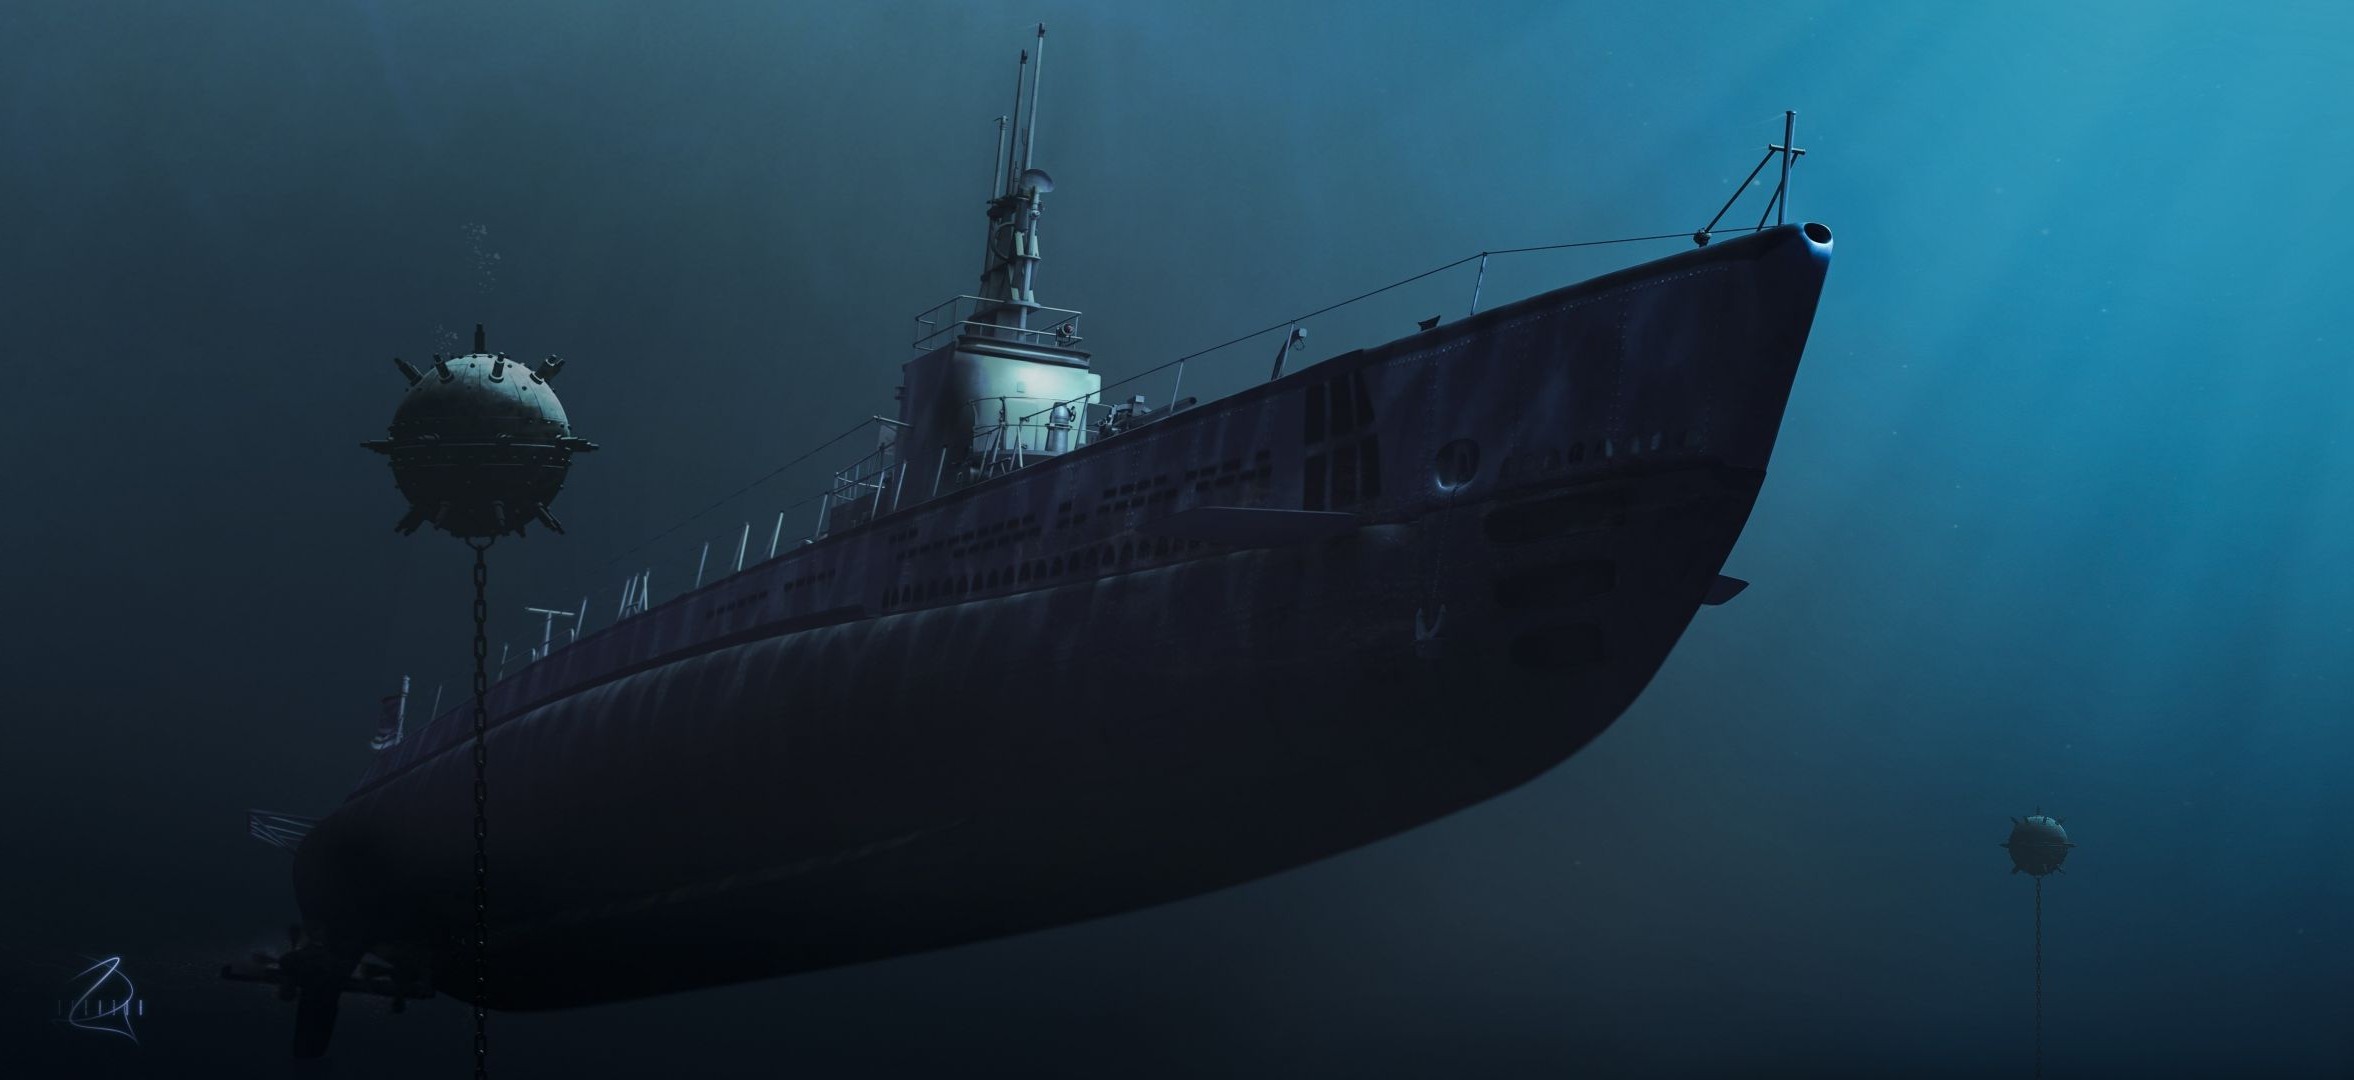 submarines watercraft water ocean sea ship transportation system boat vehicle travel marine shipwreck warship navy fish